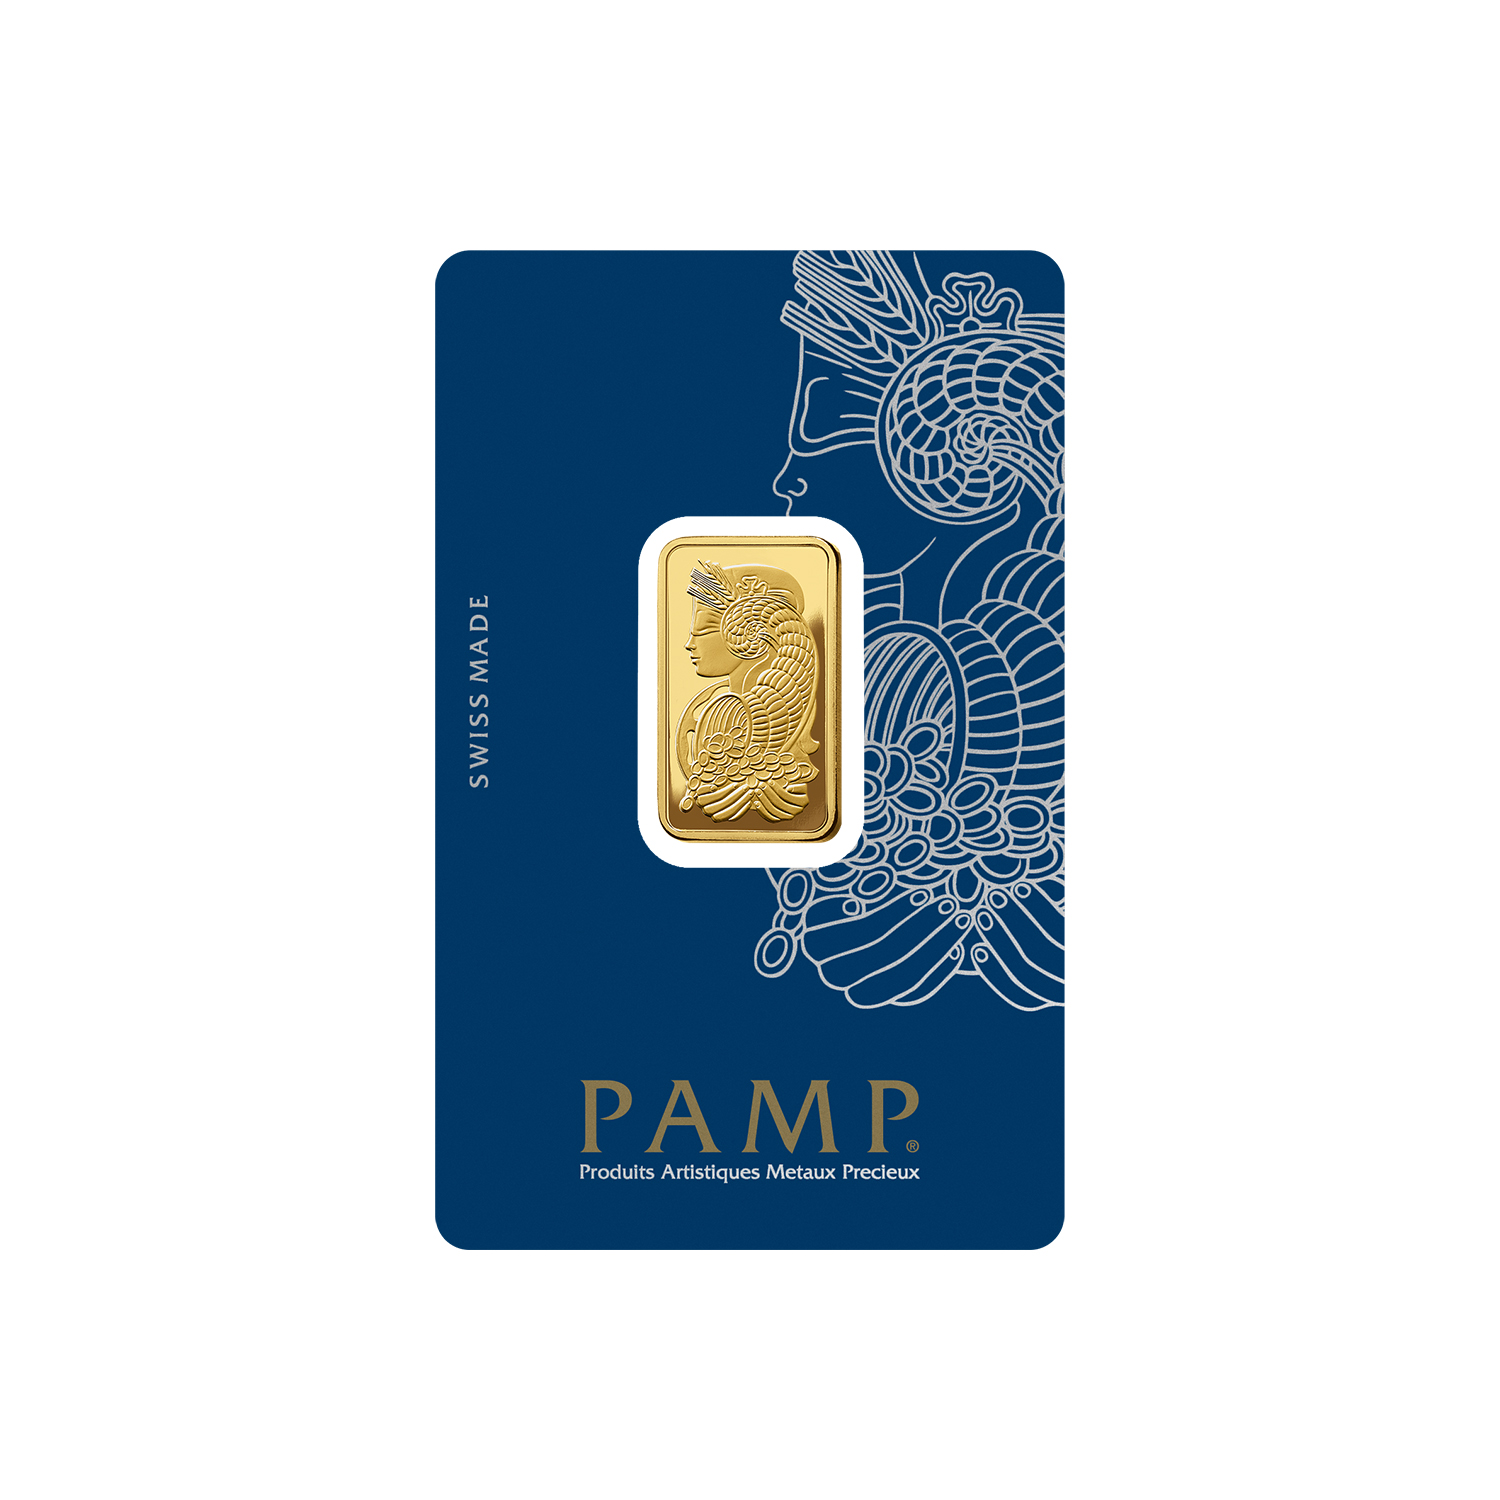 [10Gram] PAMP Fortuna Gold Minted Bar